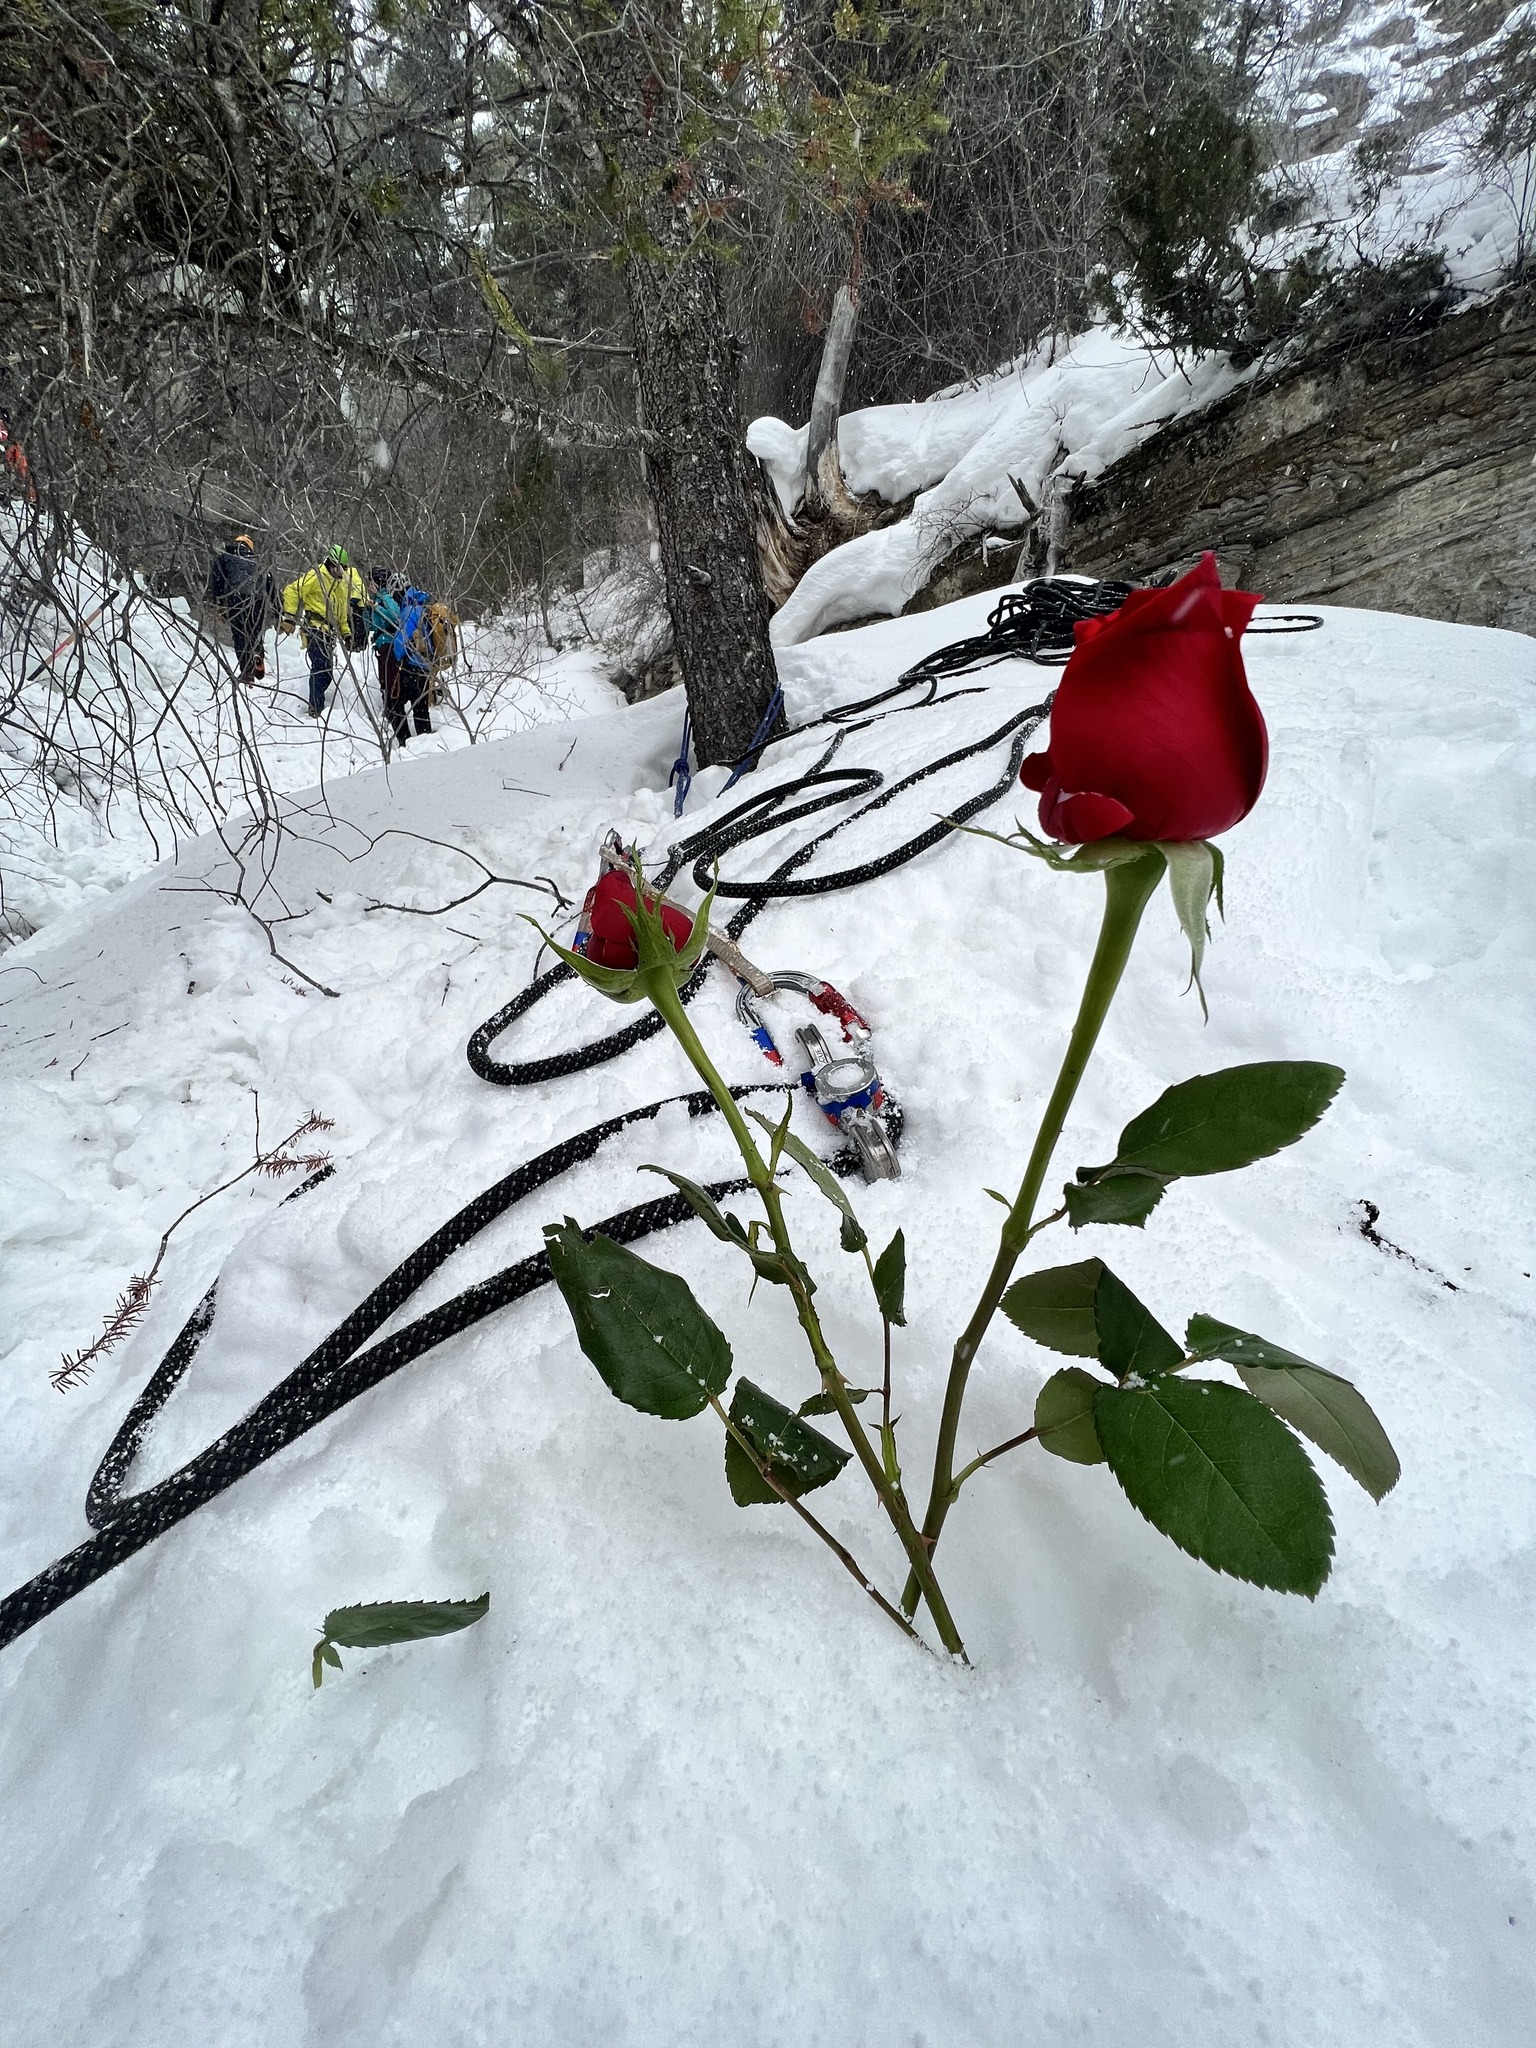 Woman Dies Saving Fellow Climber From Falling Ice On Frozen Waterfall in Utah